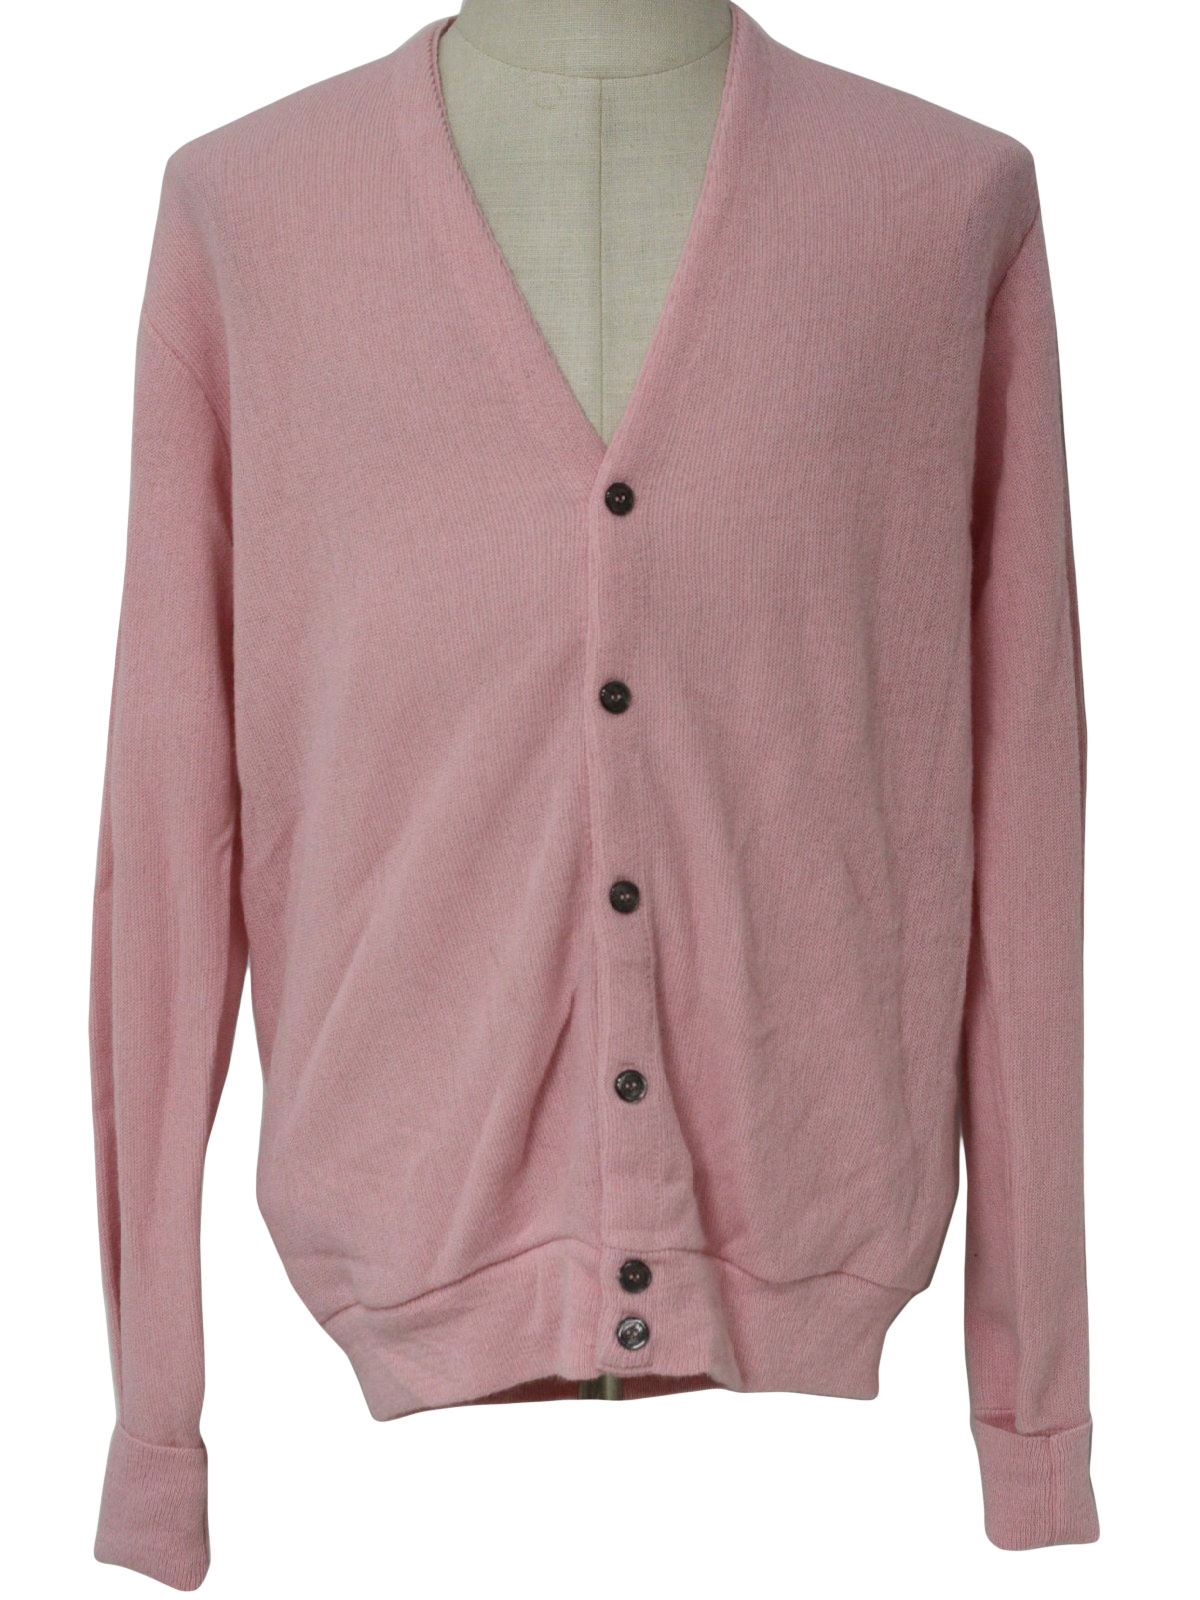 Retro 1970s Caridgan Sweater: 70s -The Fox Collection- Mens light pink ...